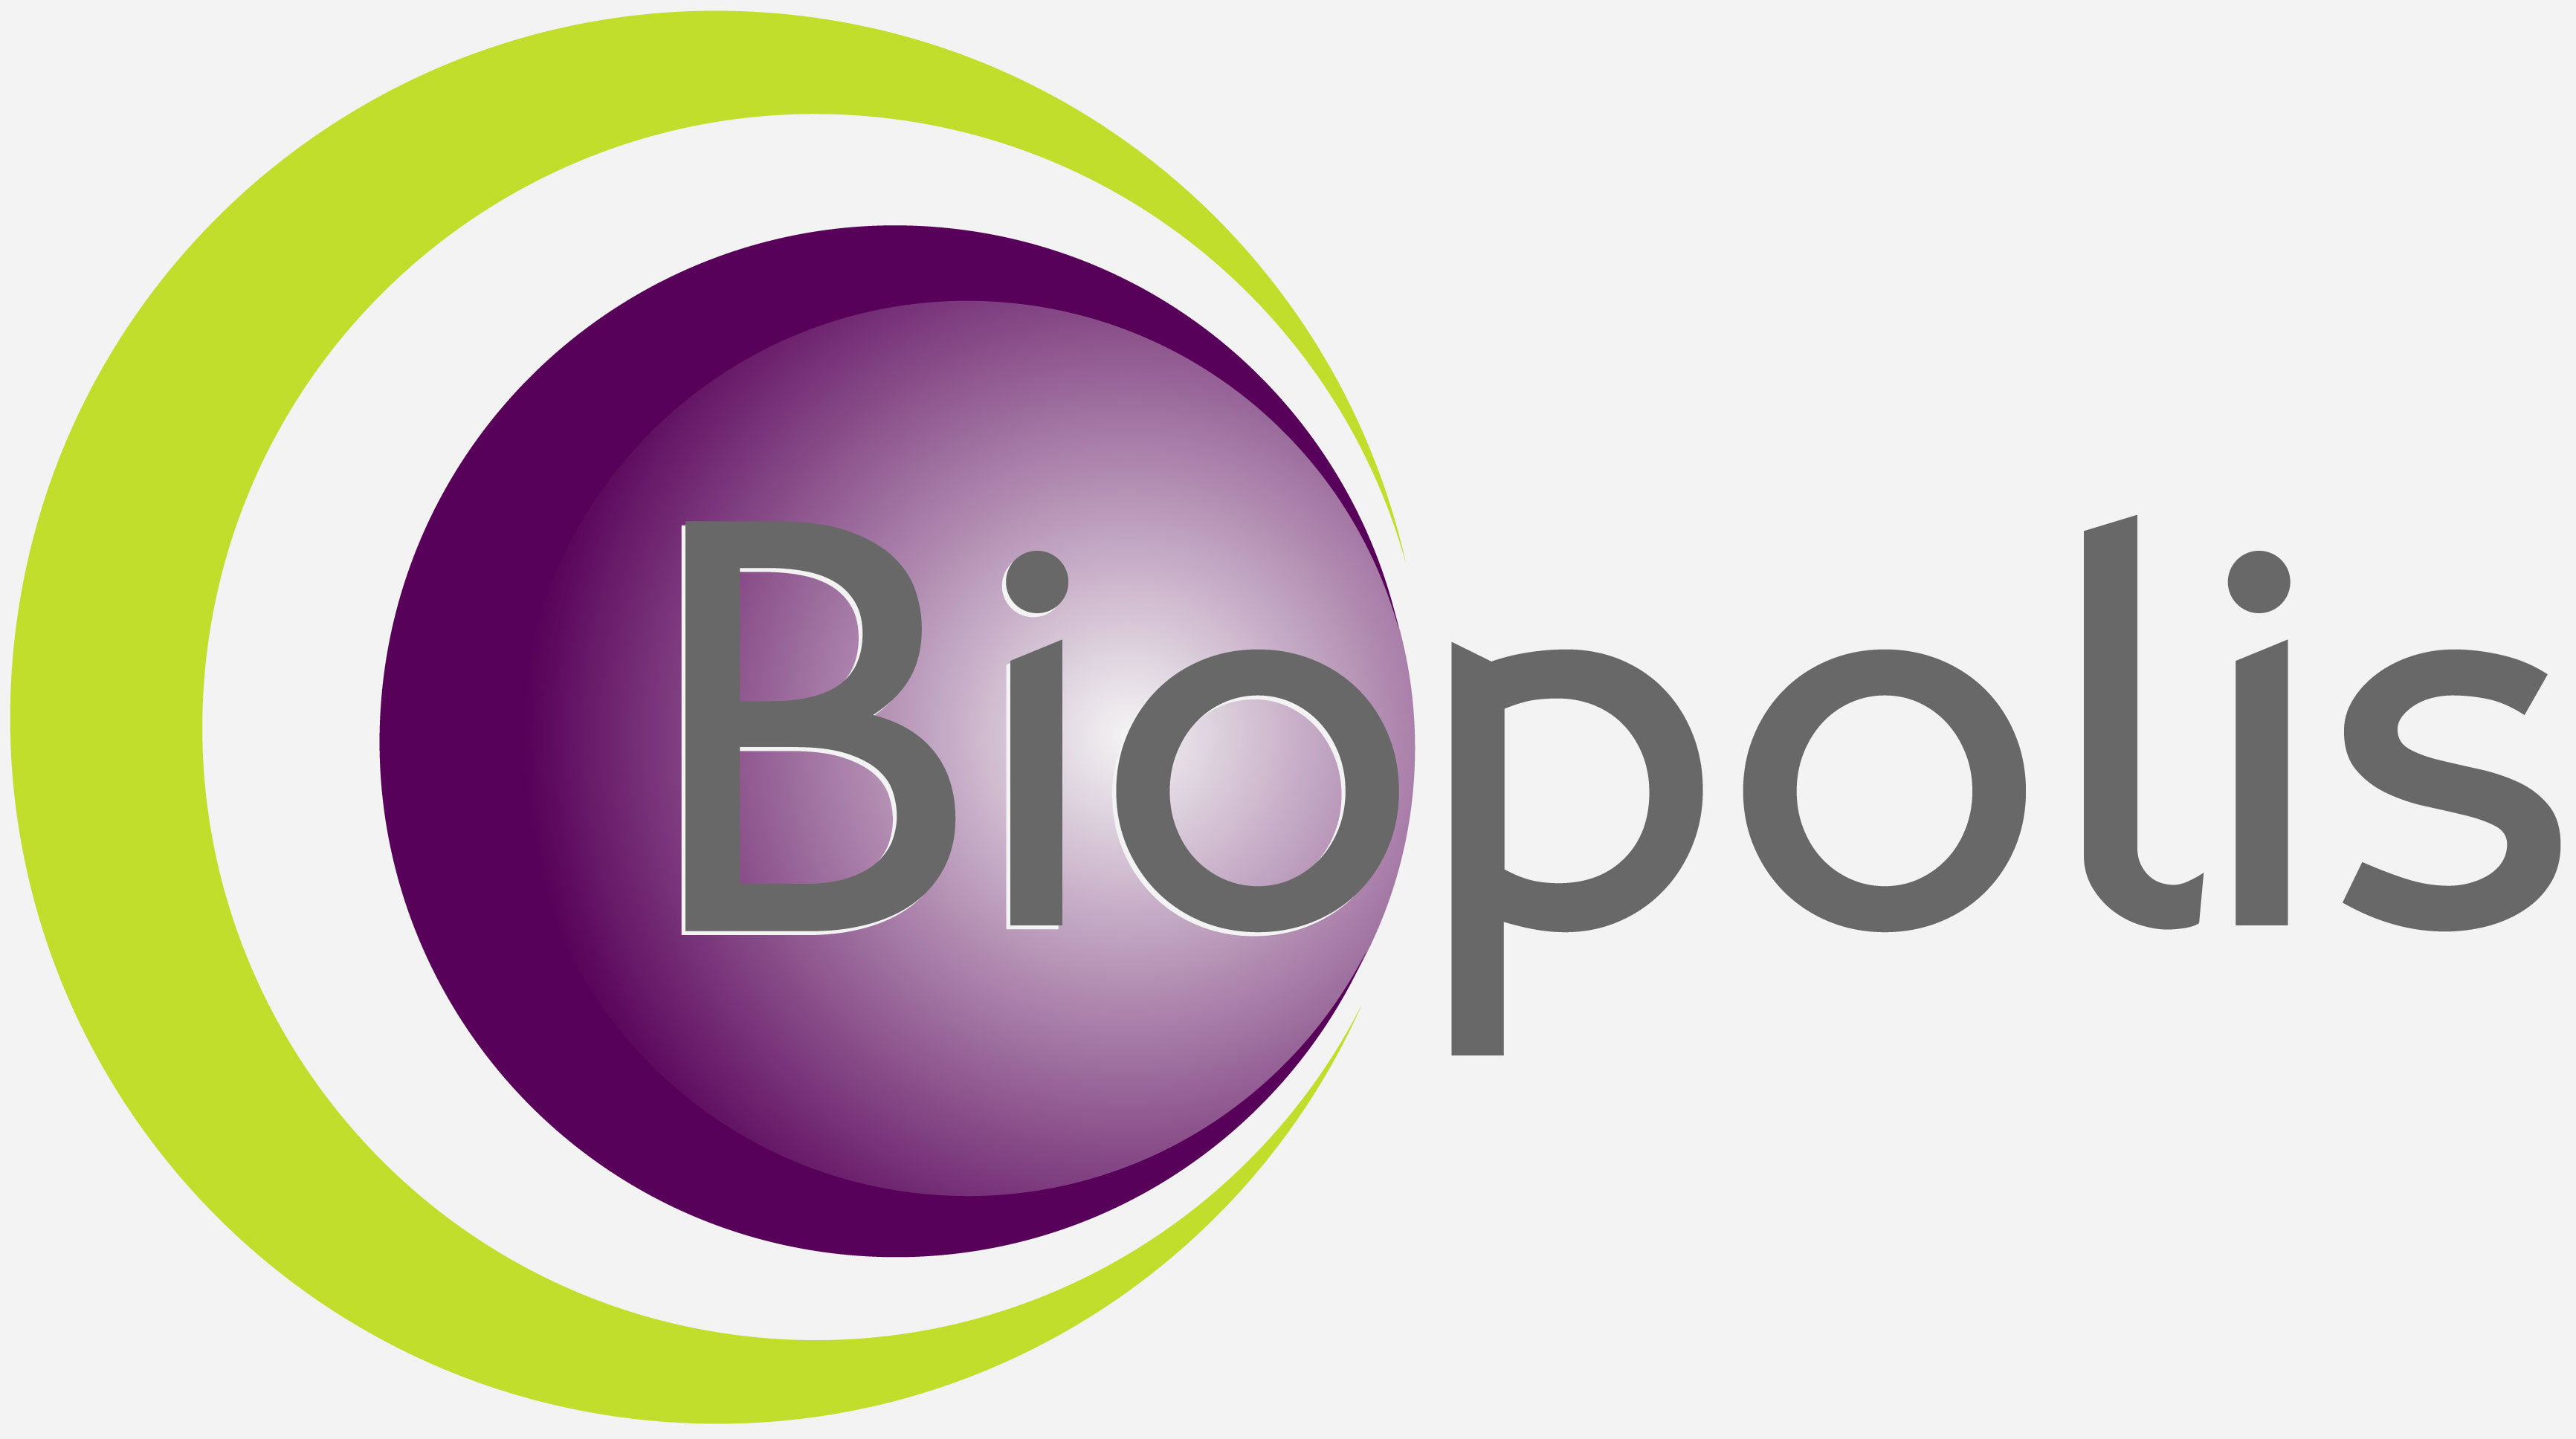 Biopolis